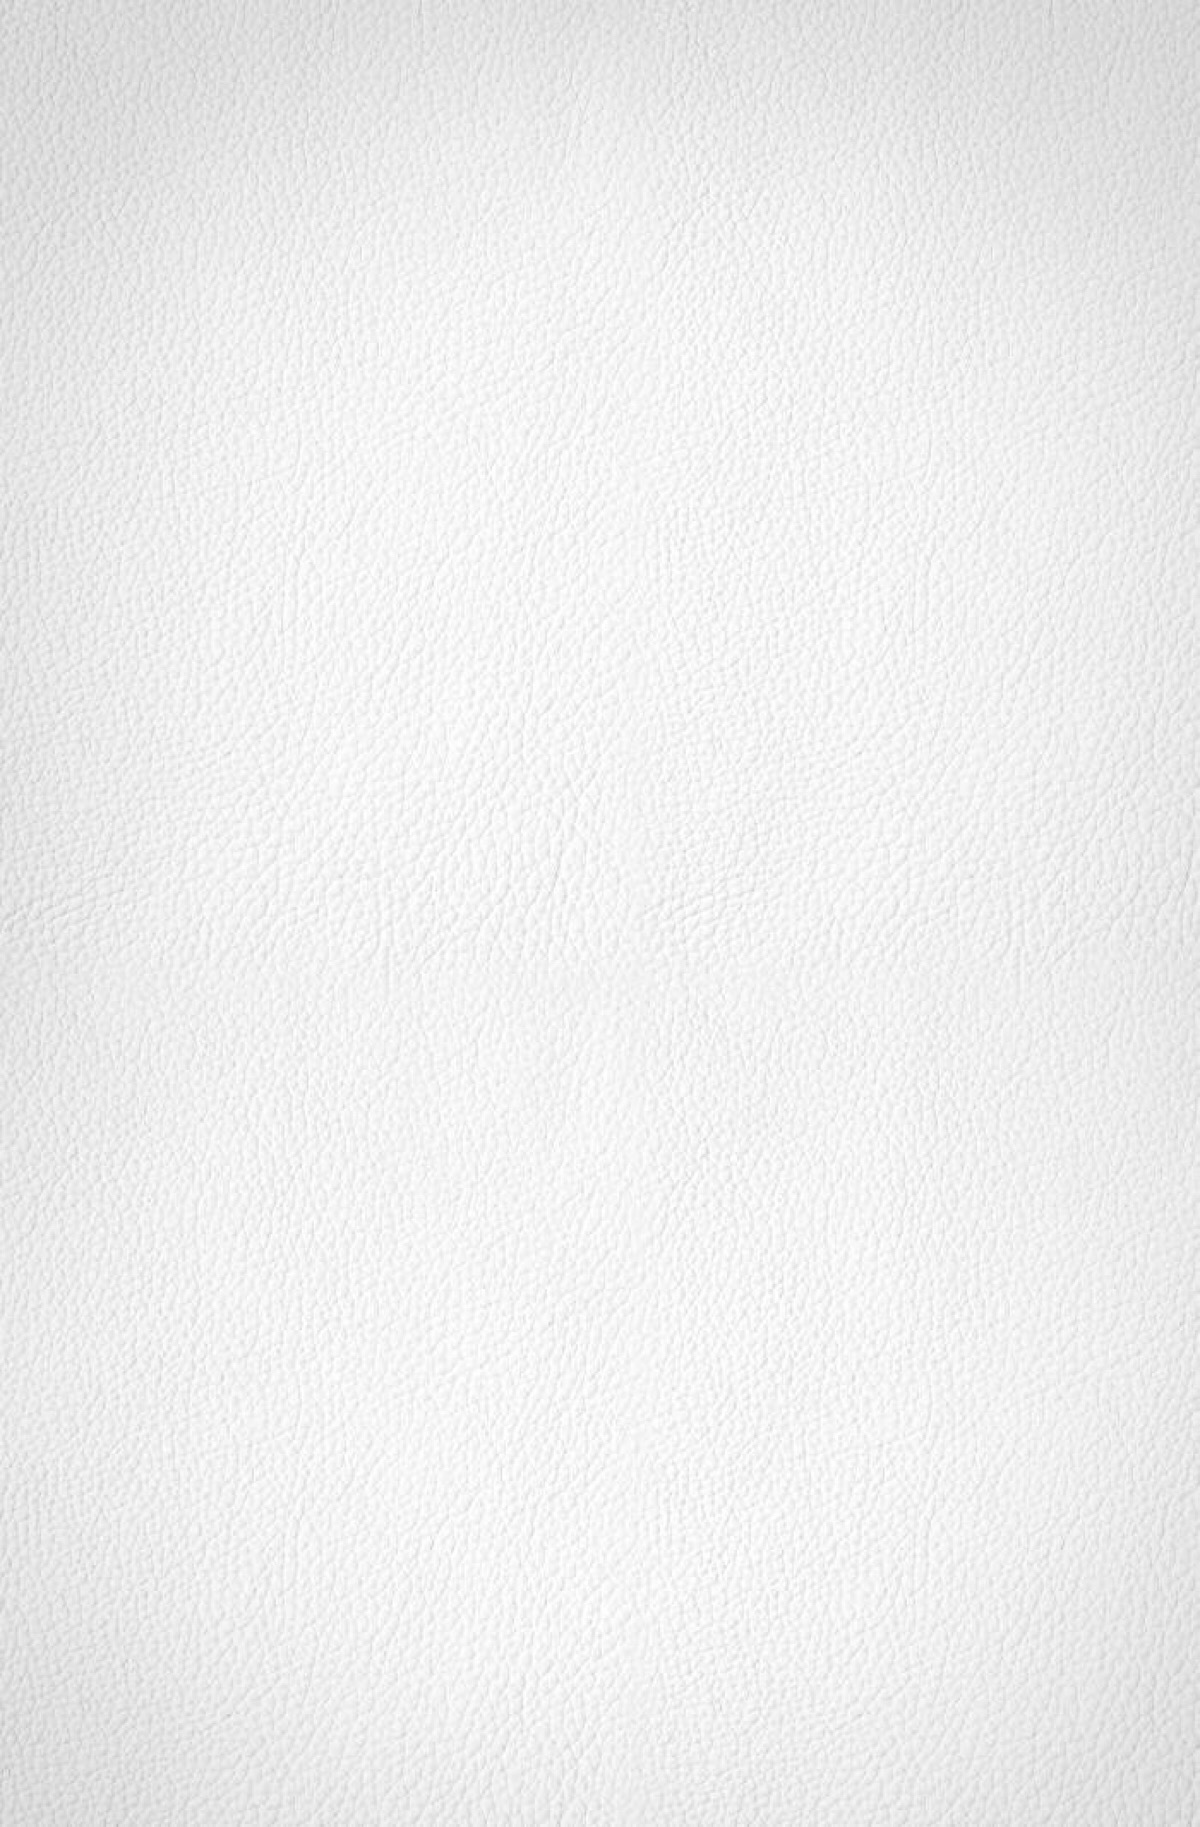 iphonex纯白色壁纸图片